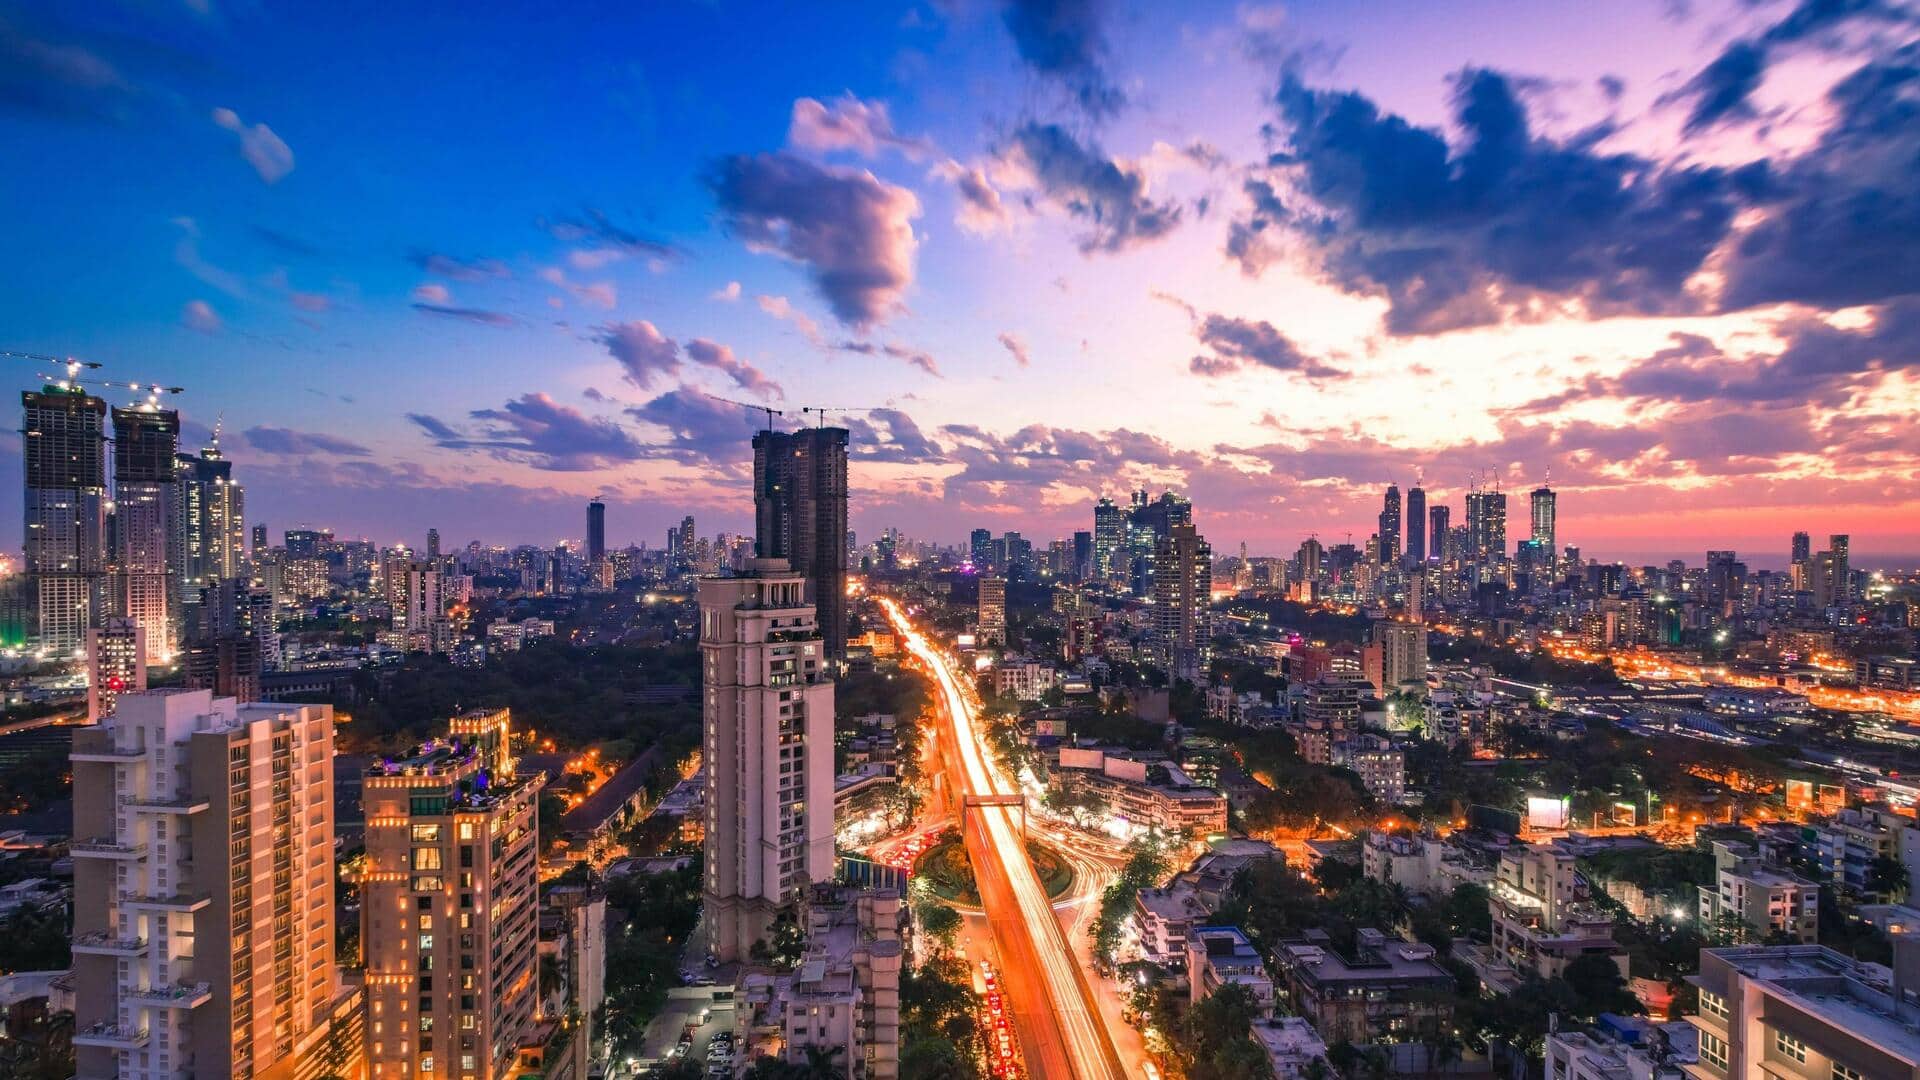 Mumbai overtakes Beijing as Asia's top spot for billionaires